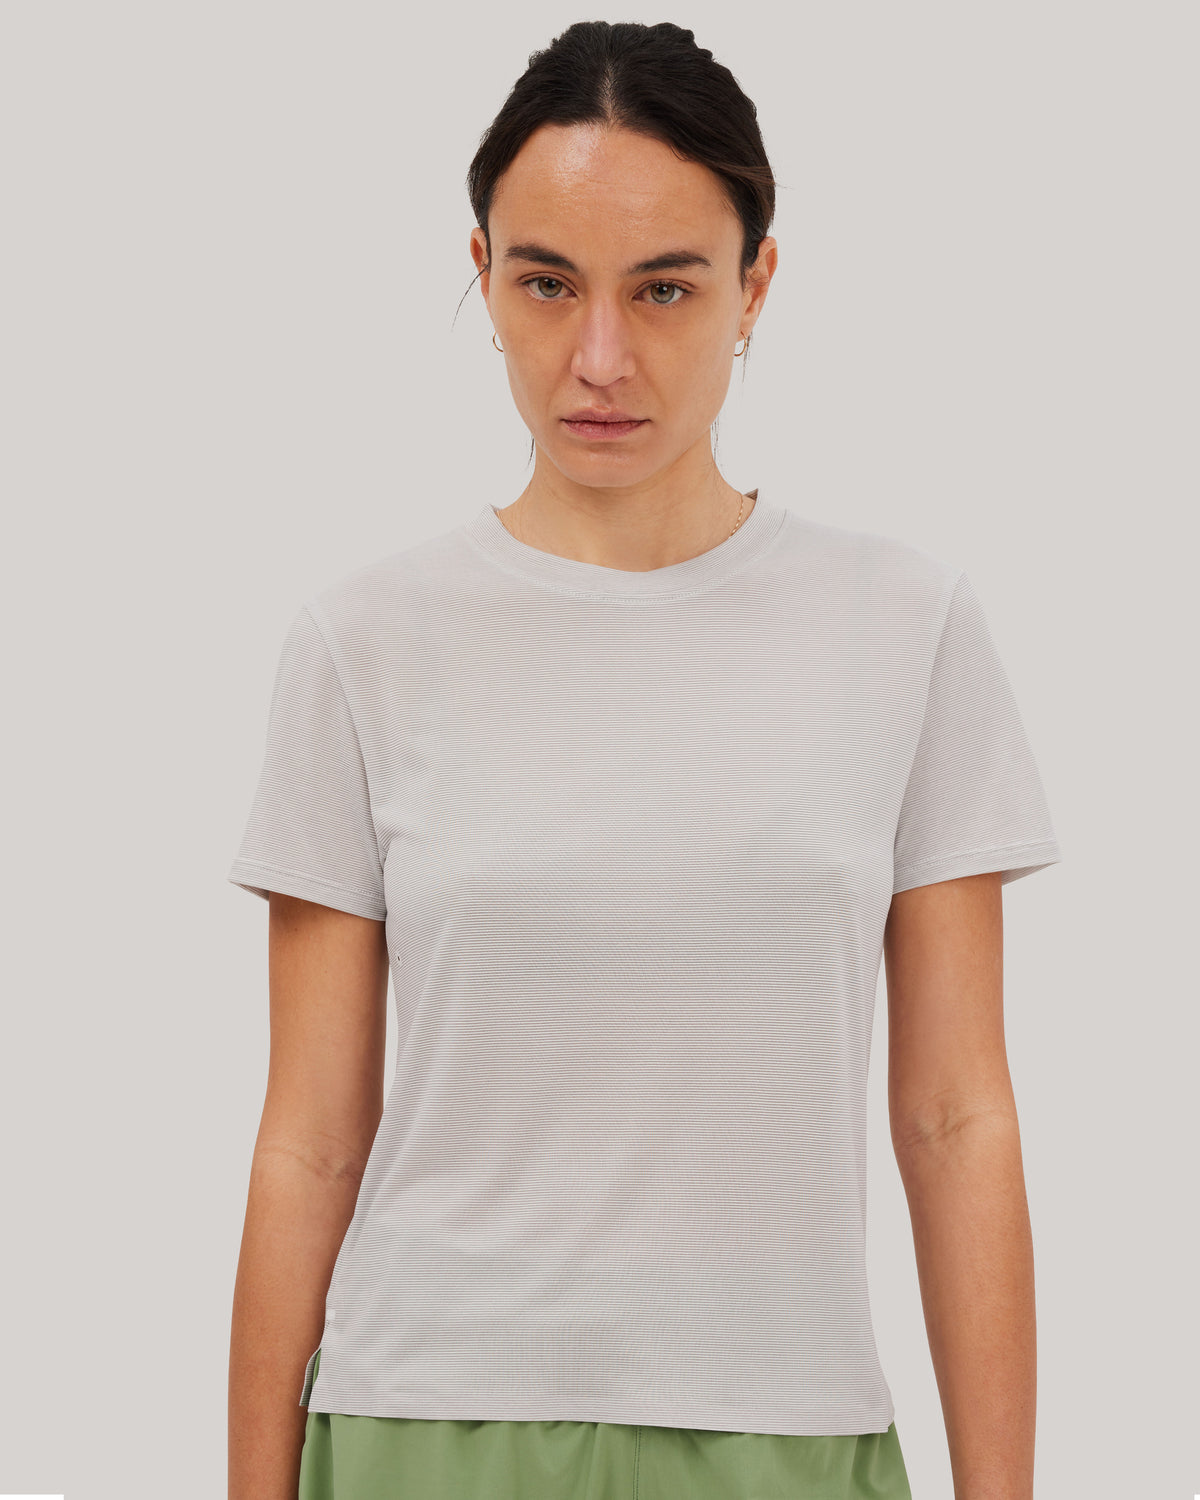 T-shirt Femme Cortes Polartec